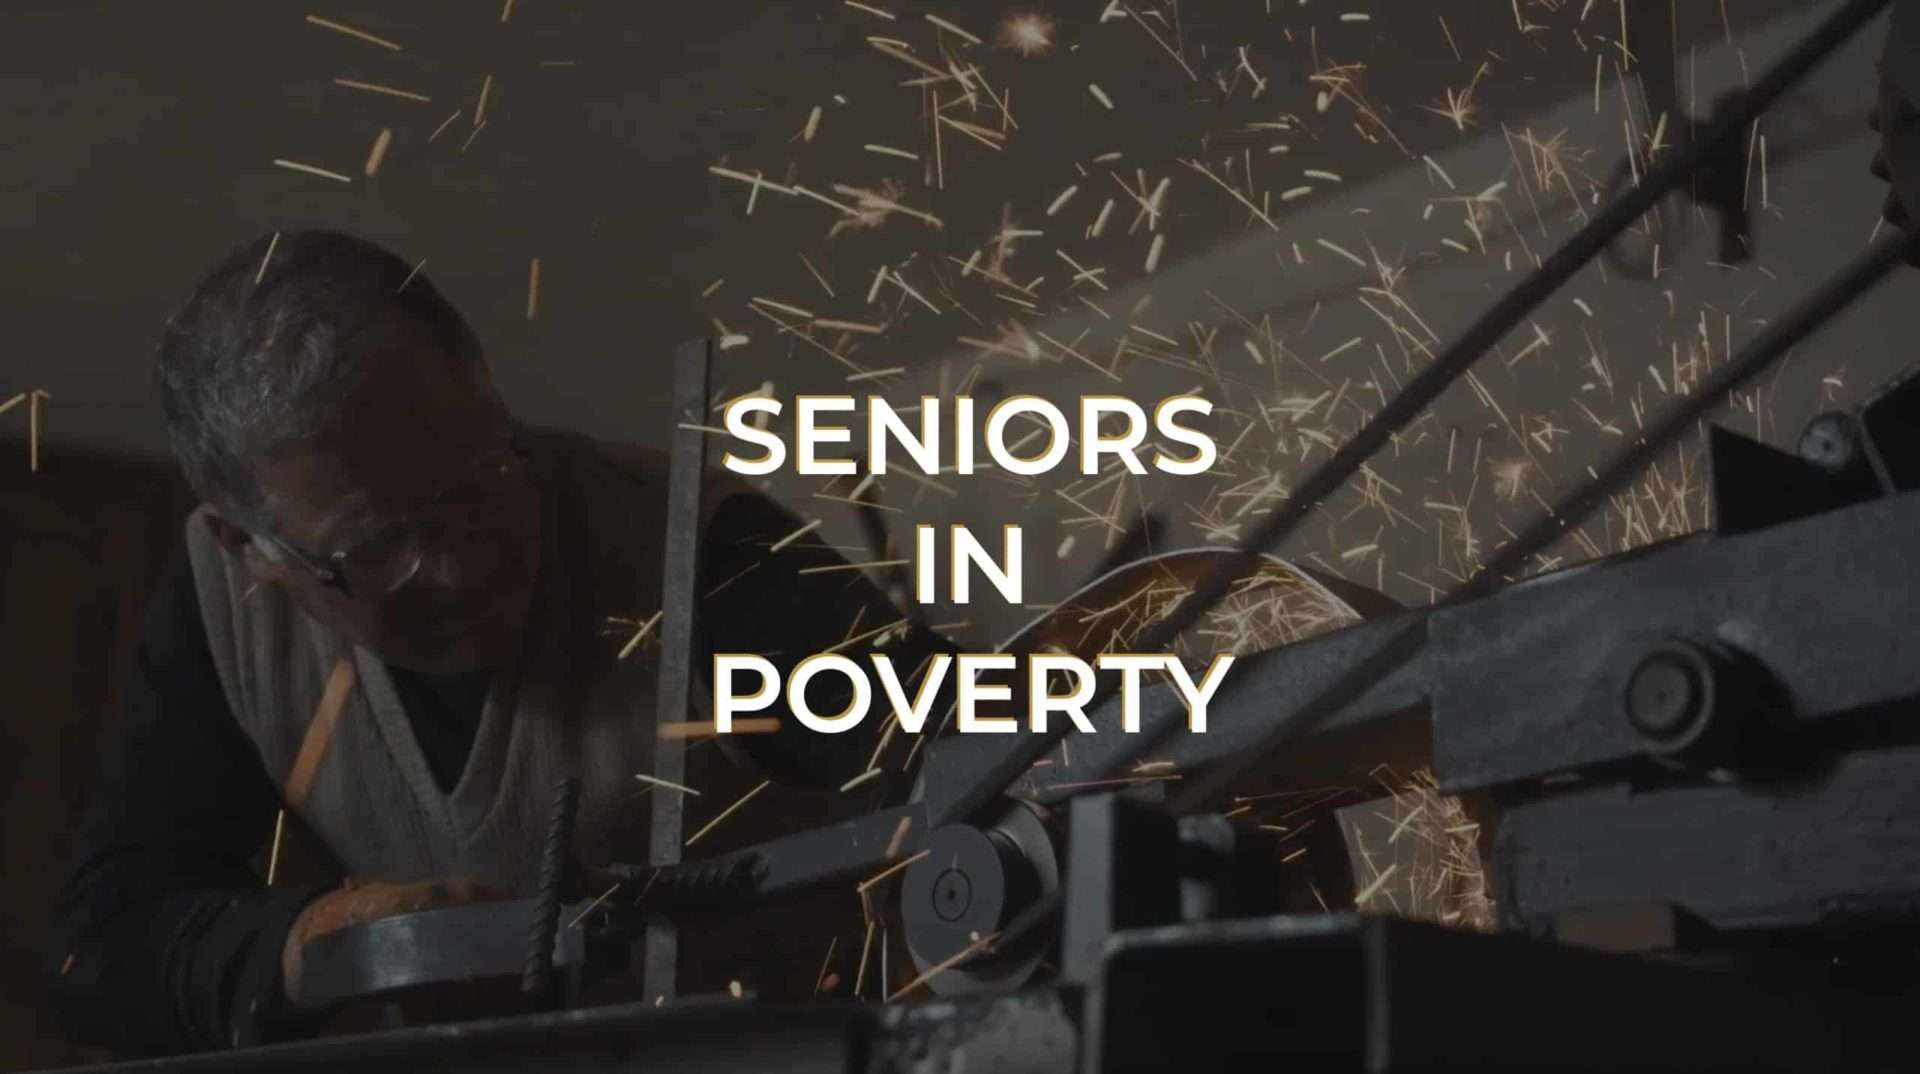 poverty in seniors